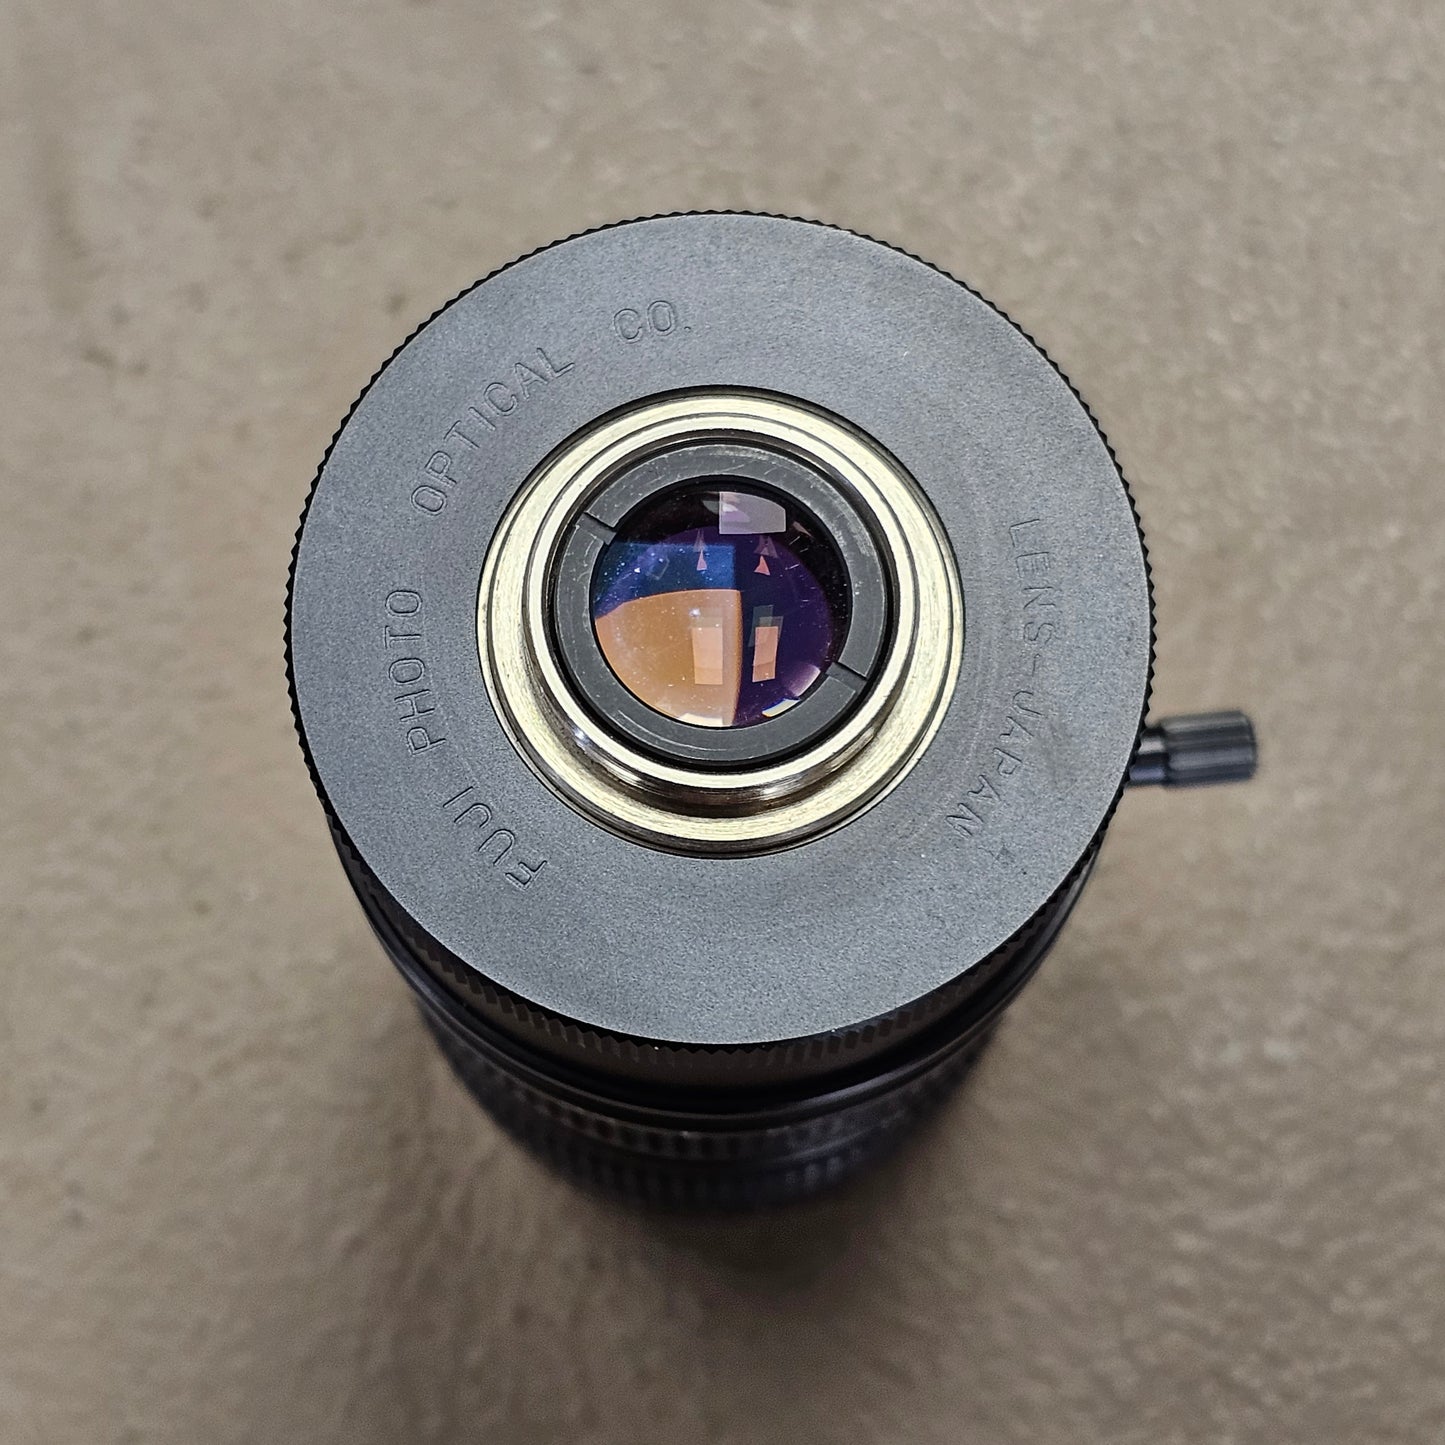 Fujinon 12.5-70mm T1.2 TV Zoom Lens H6x12.5R C-Mount S# 998499